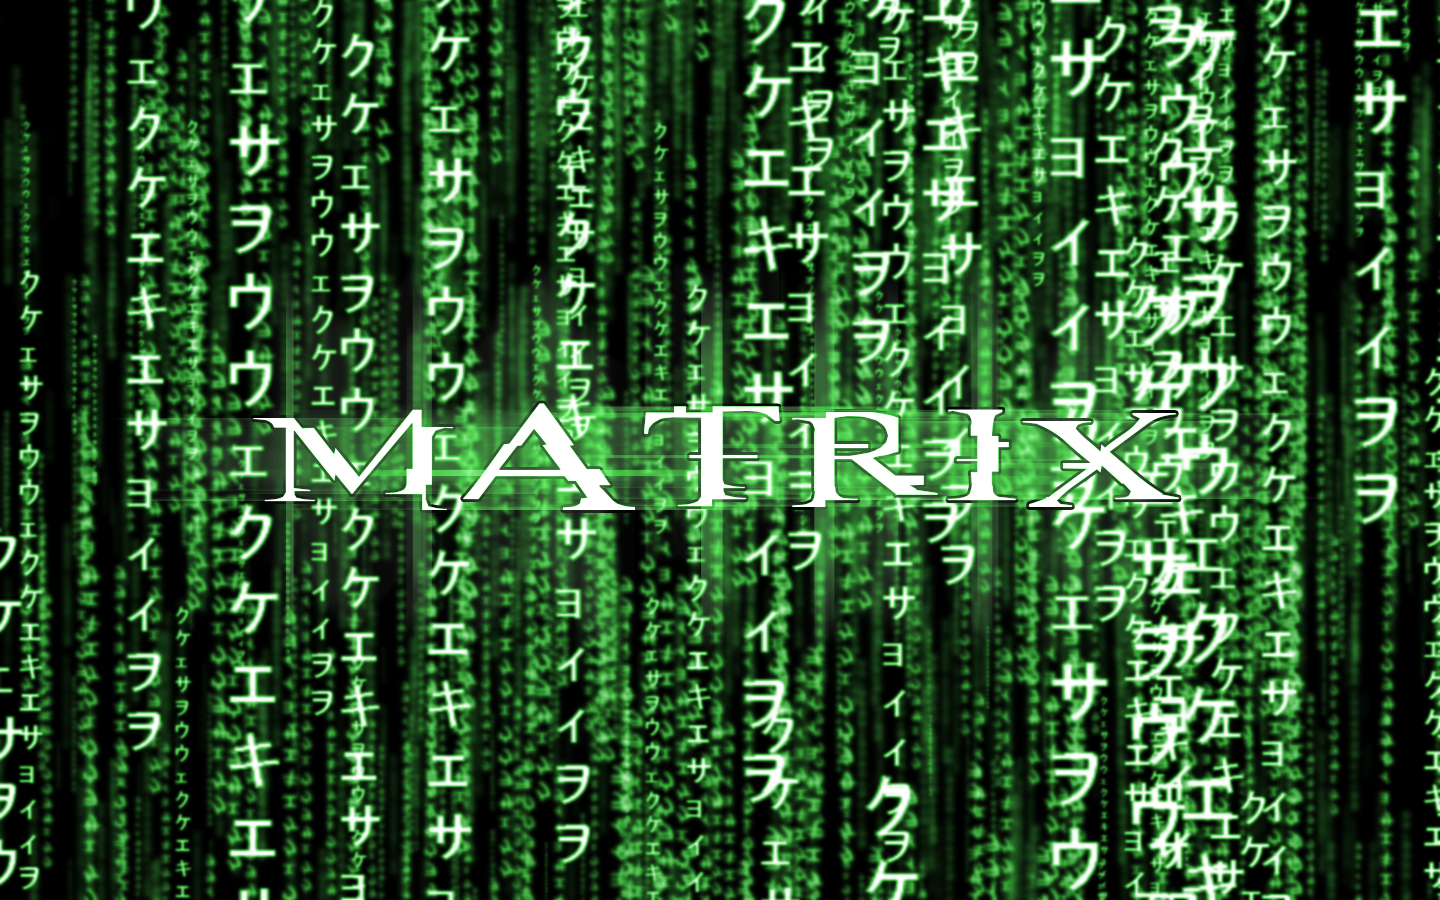 http://www.centrocp.com/matrix-como-recurso-didactico-en-filosofia/